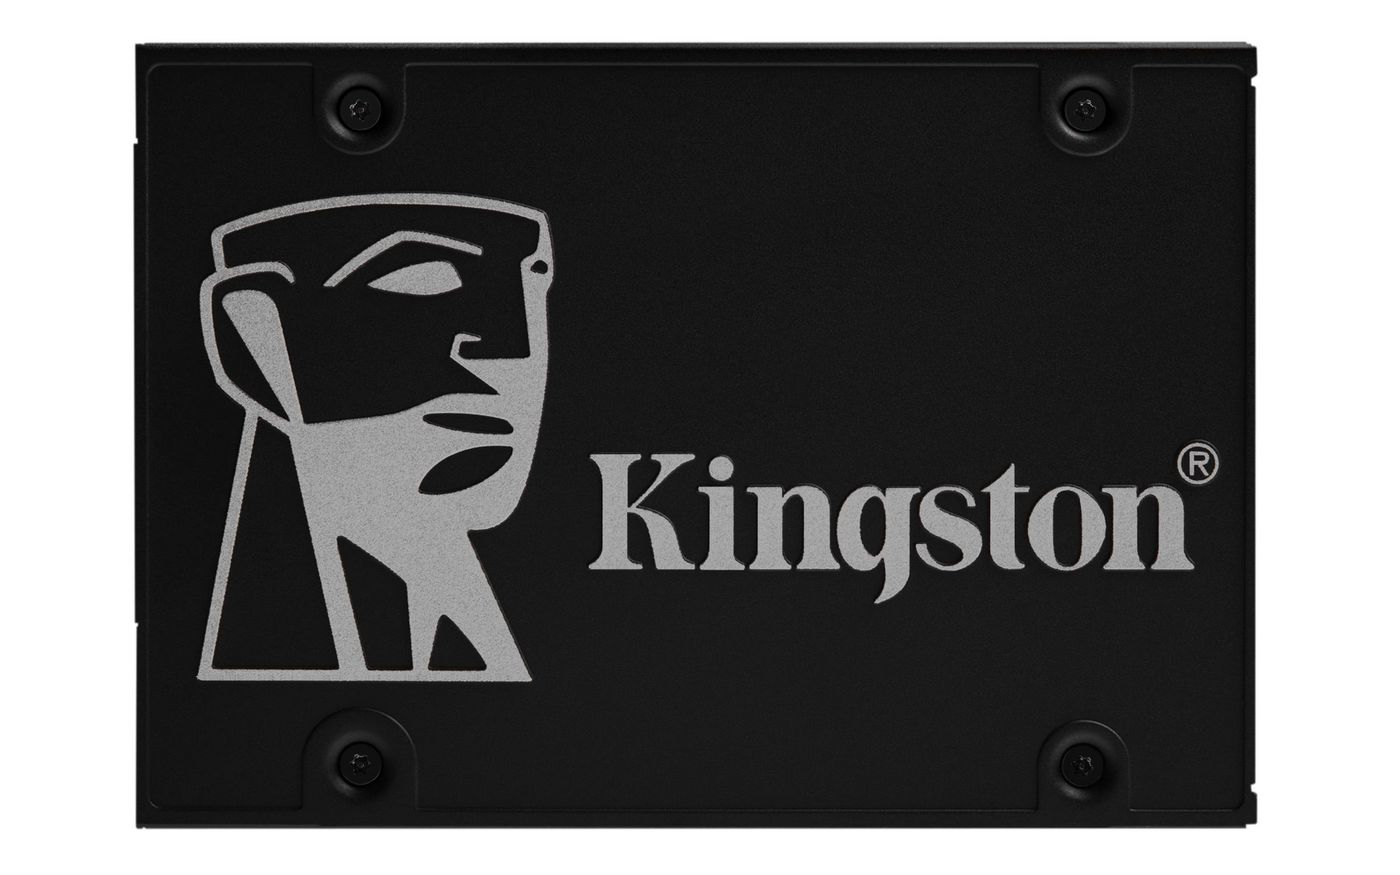 Kingston SKC600B256G W128201124 256GB KC600 SATA3 2.5IN SSD 